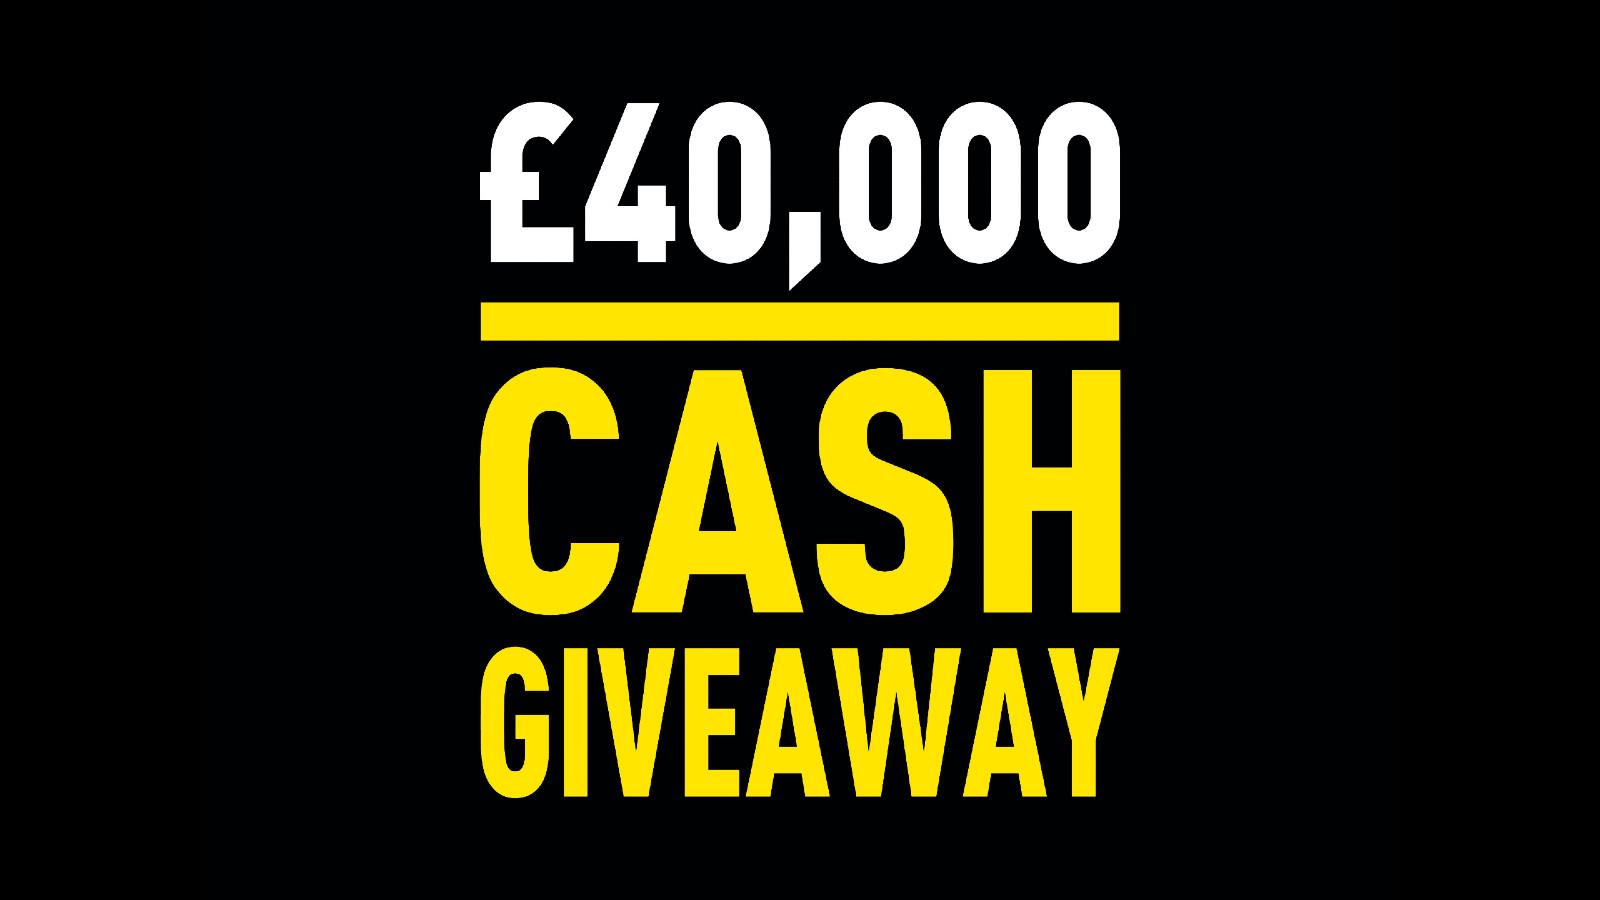 Fix ALL £40,000 Cash Giveaway image